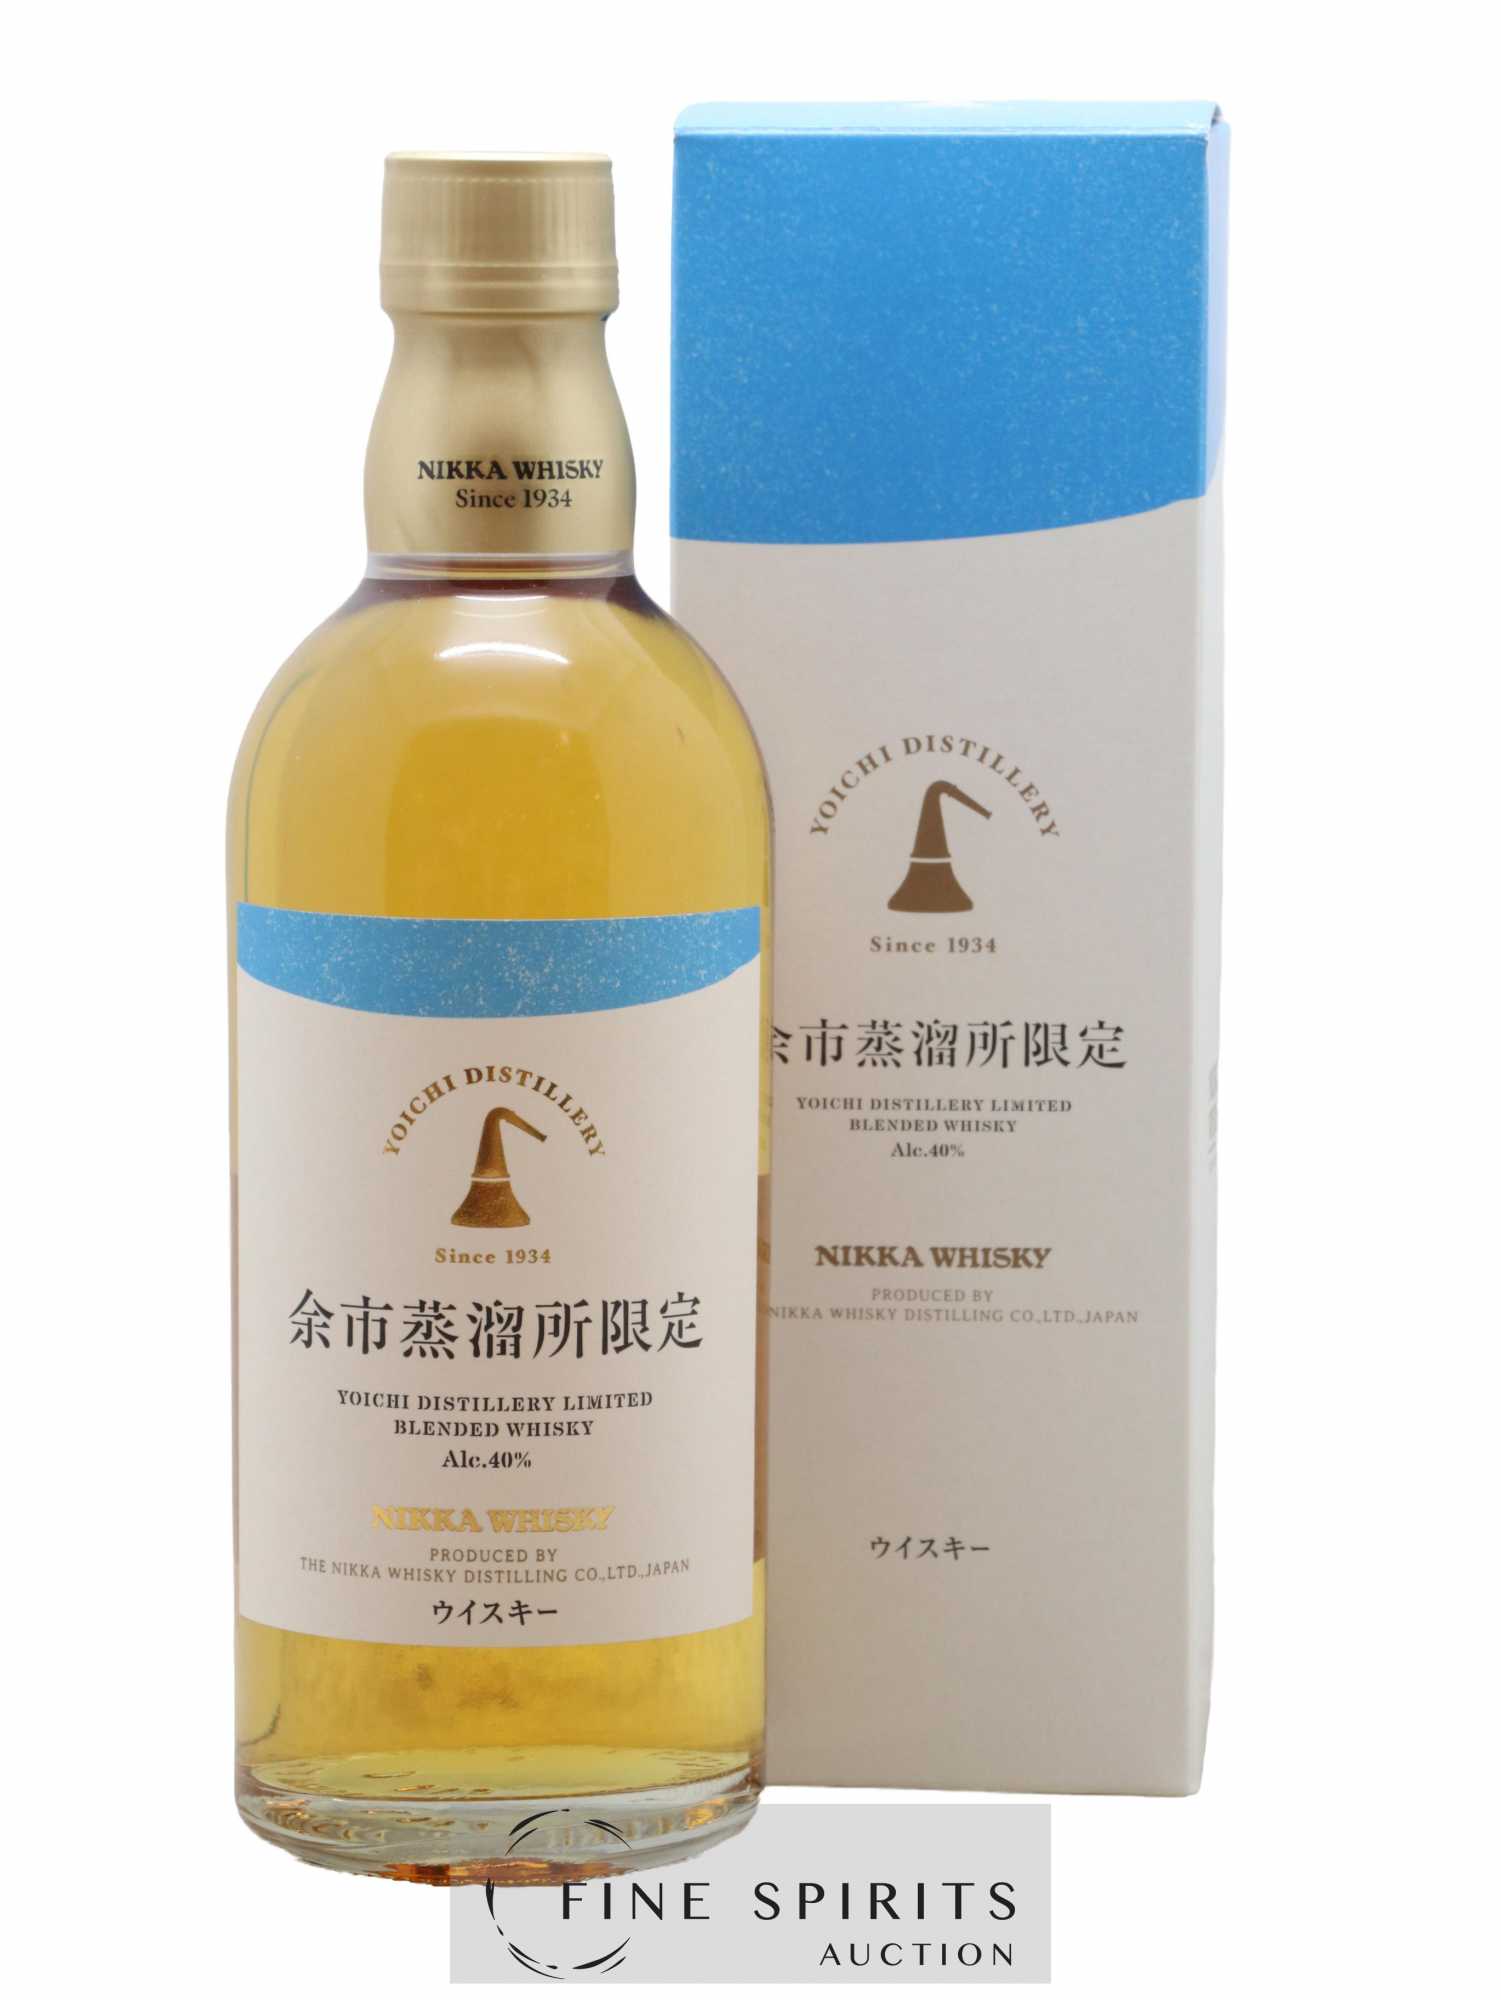 Yoichi Of. Blended Limited Nikka Whisky